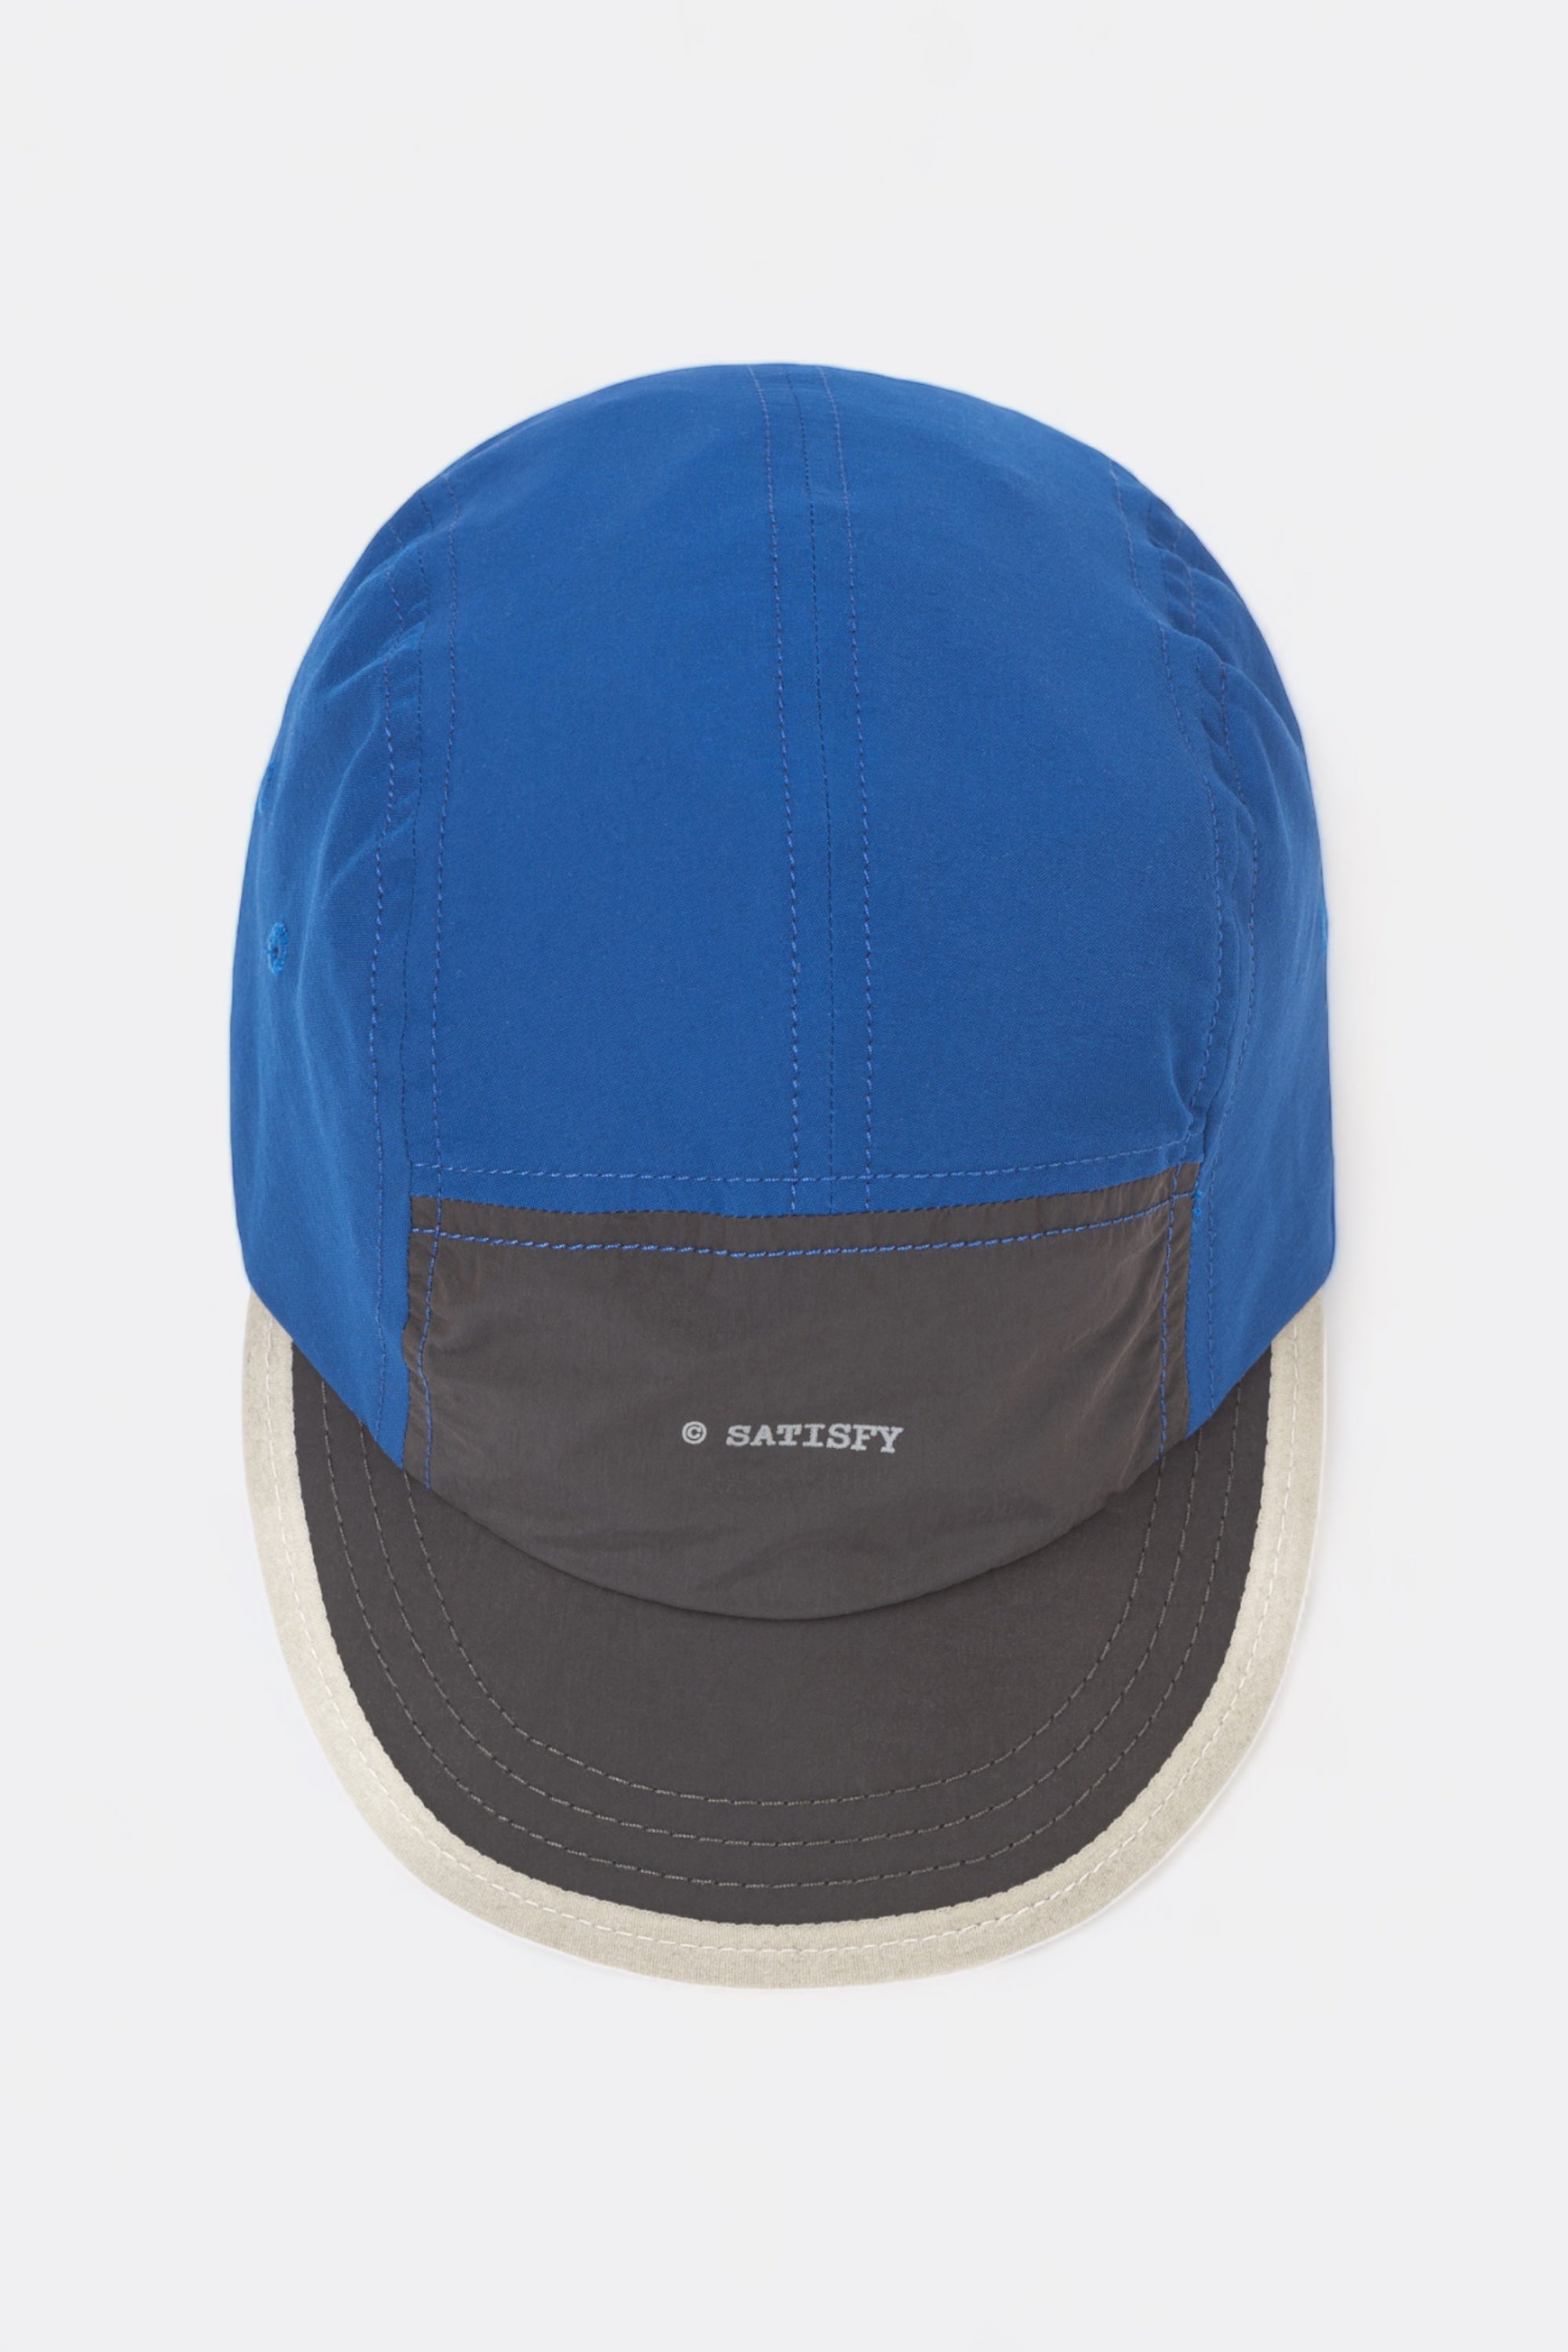 Satisfy - PeaceShell™ Trail Cap (Blue)